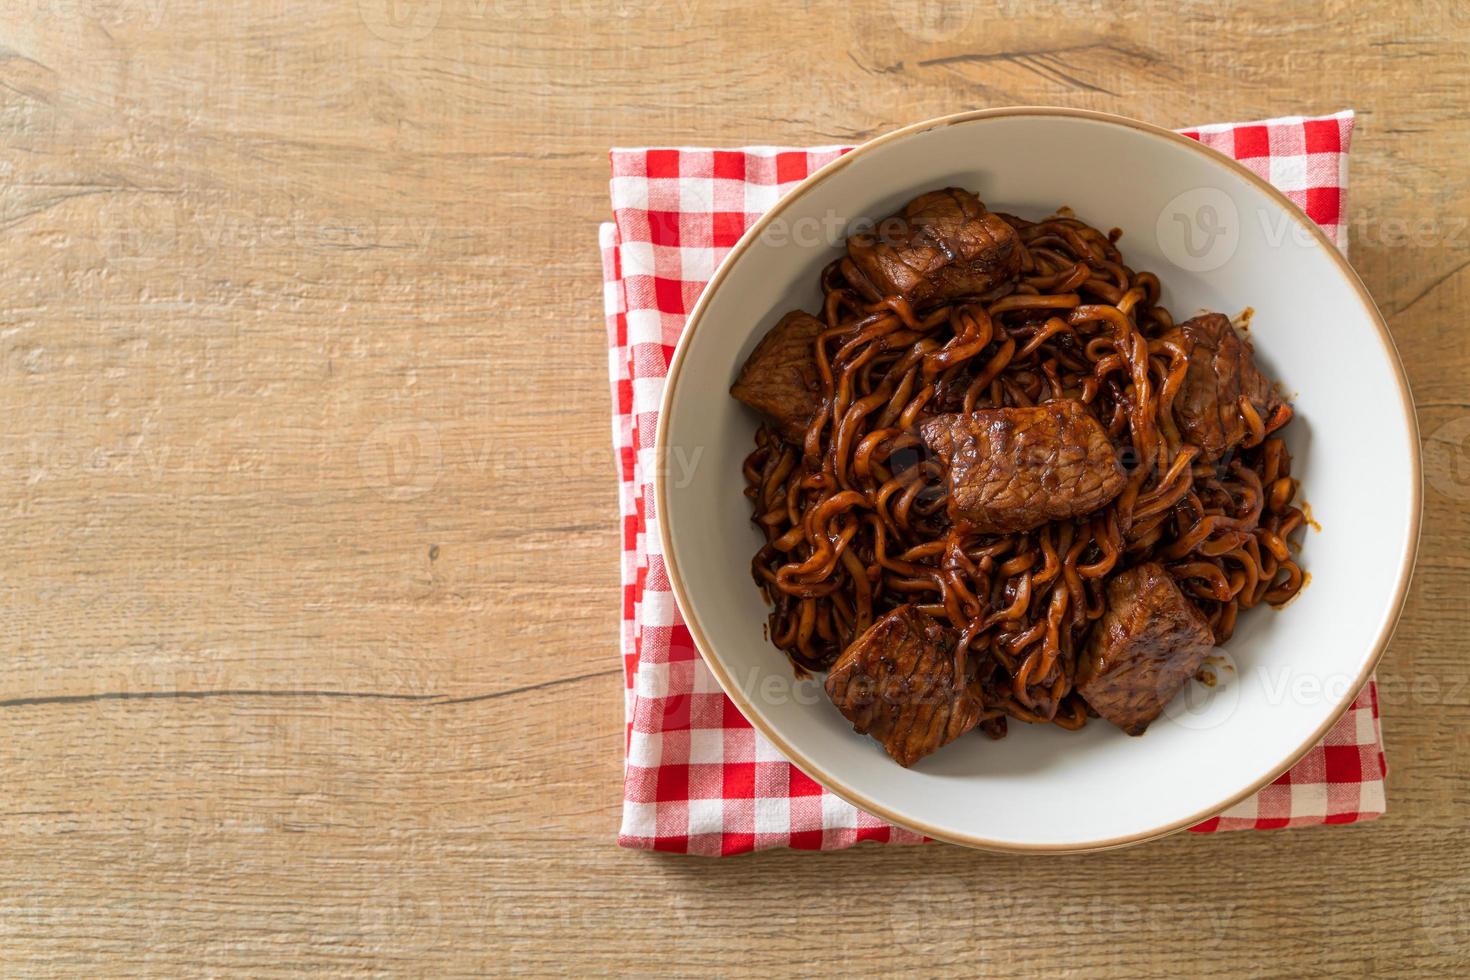 jjapaguri o chapaguri, spaghetti piccanti di fagioli neri coreani con carne di manzo foto